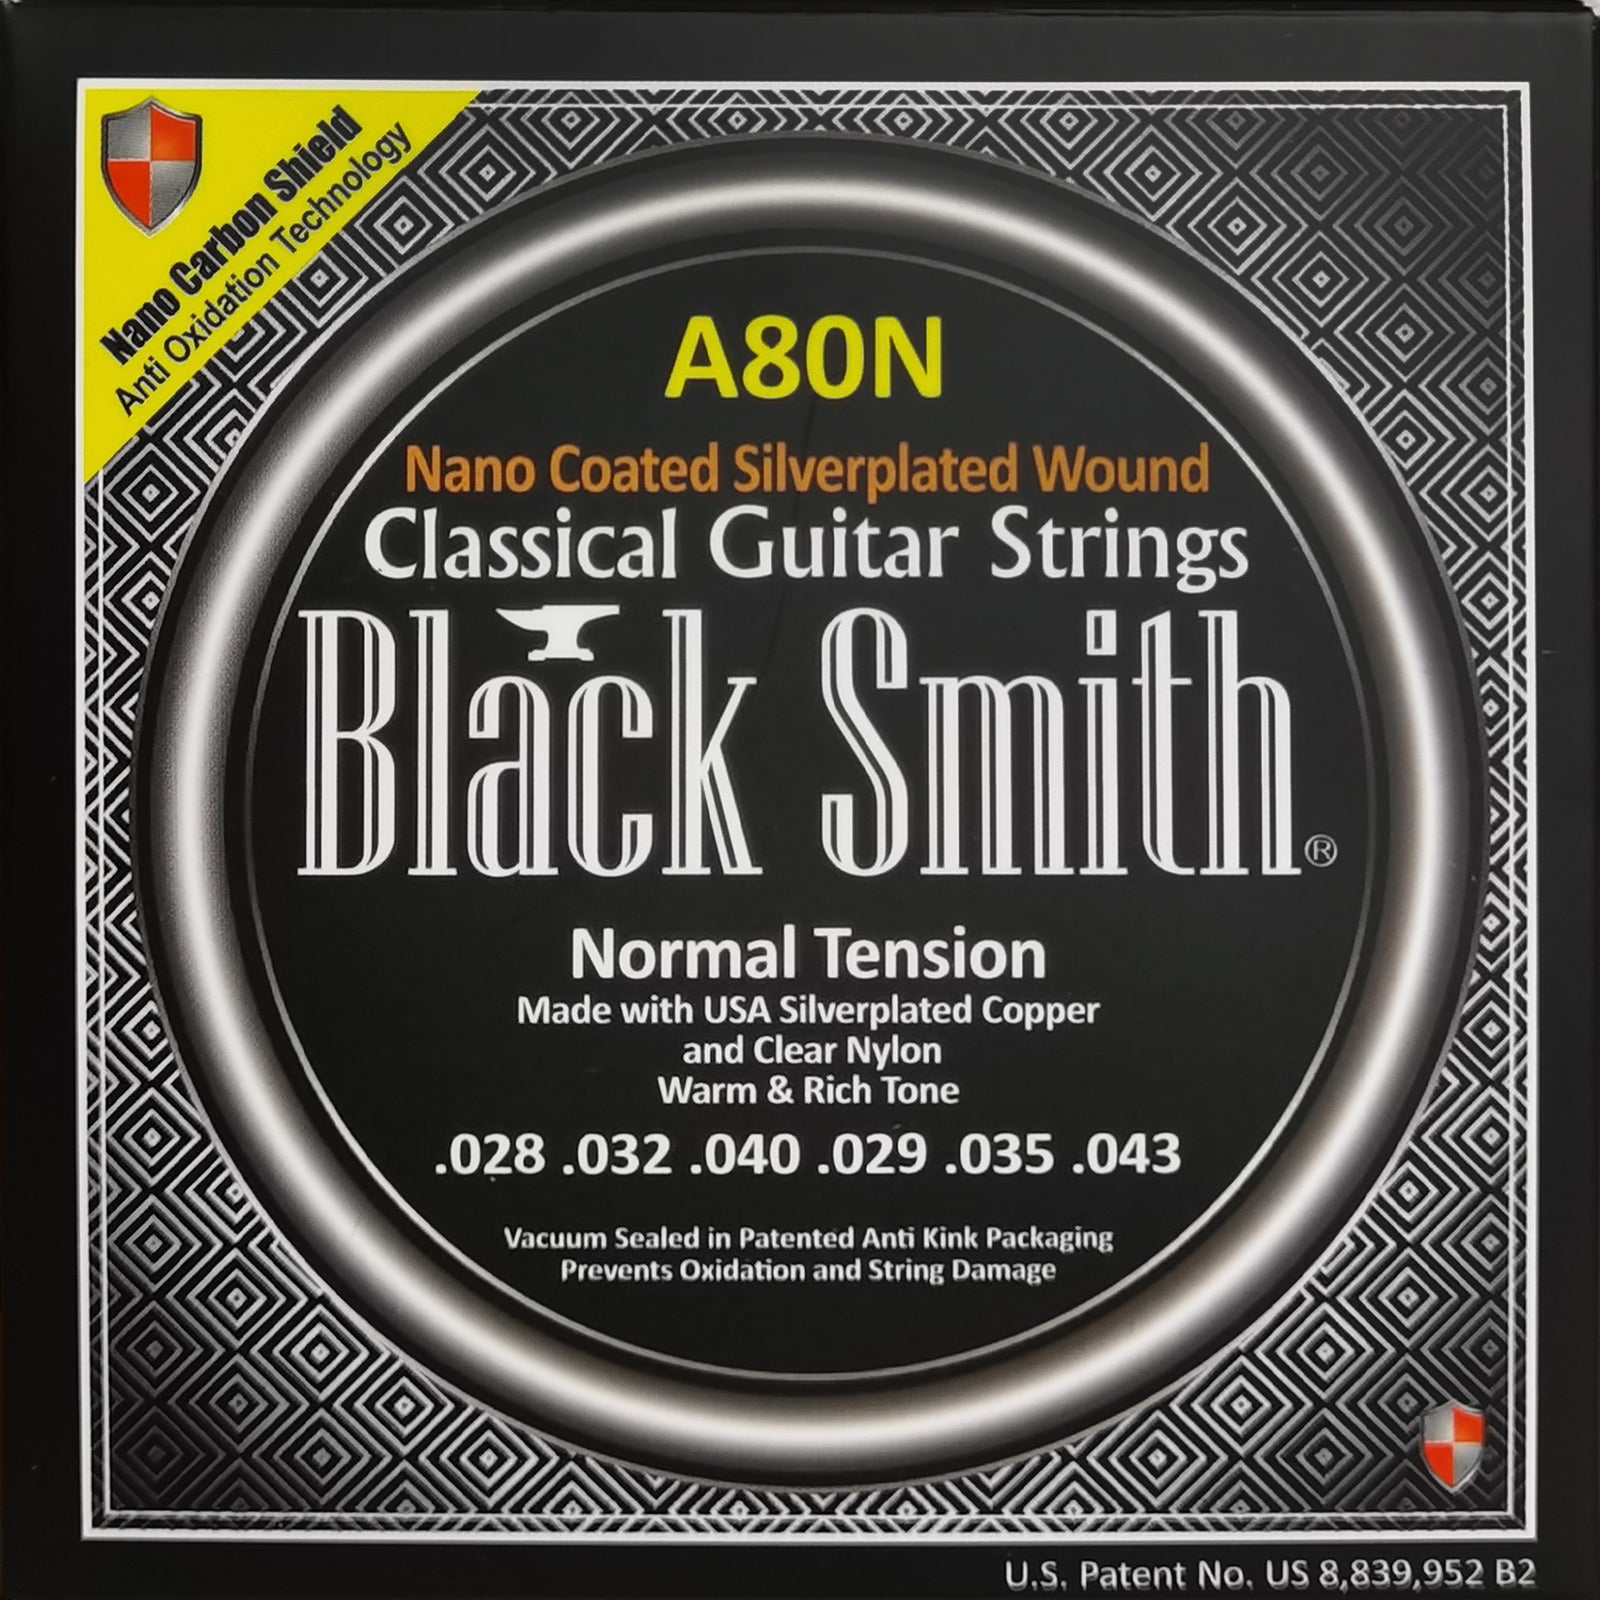 Black Smith A80N Nano Coated Class Gtr String